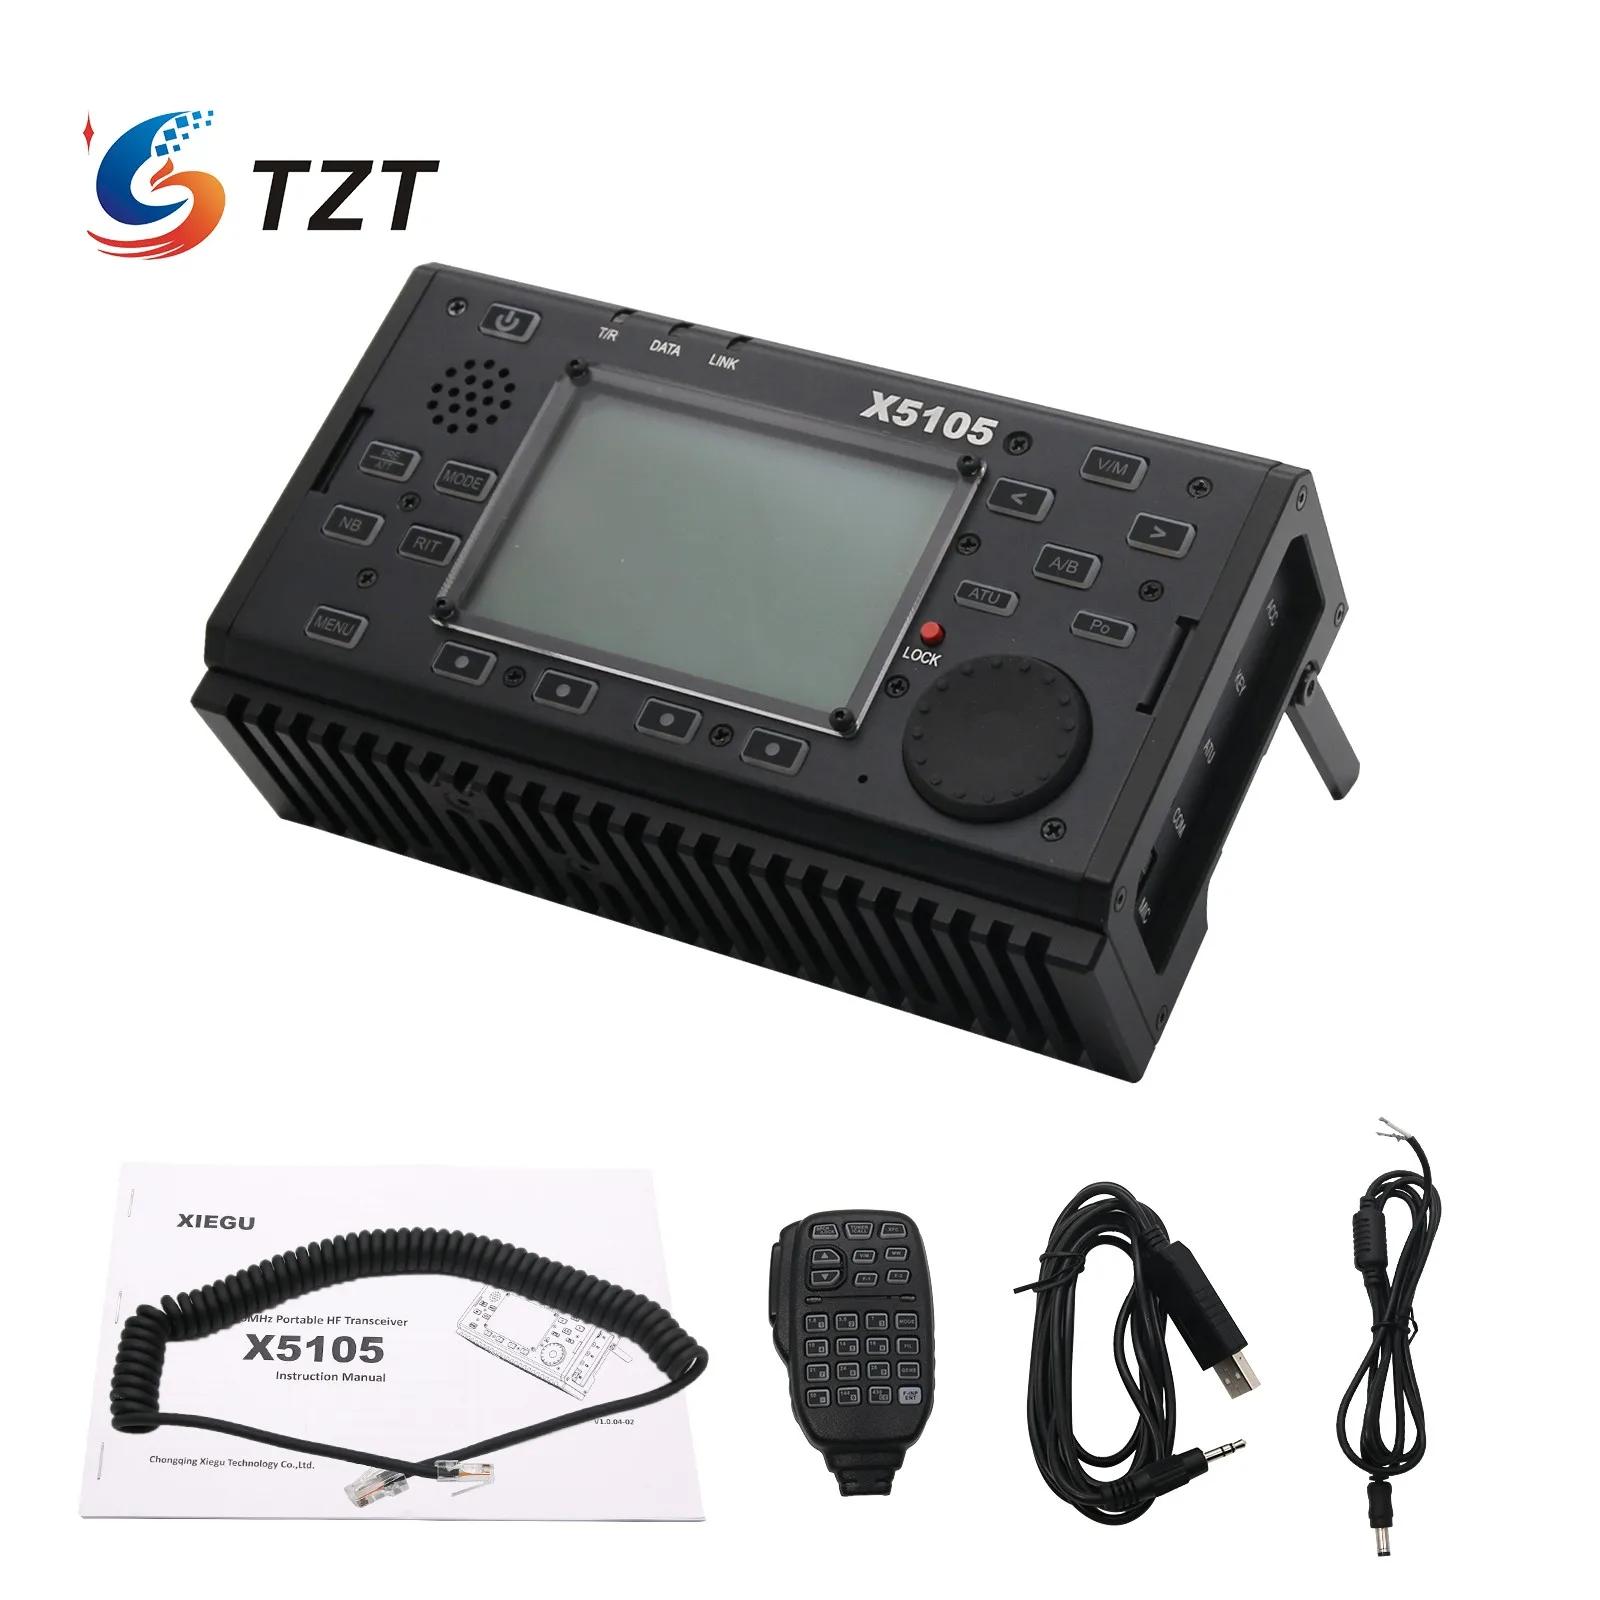 

TZT Xiegu X5105 Shortwave Radio Transceiver HF with IF Output All Bands Covering SSB CW AM FM RTTY PSK XIEGU X5105